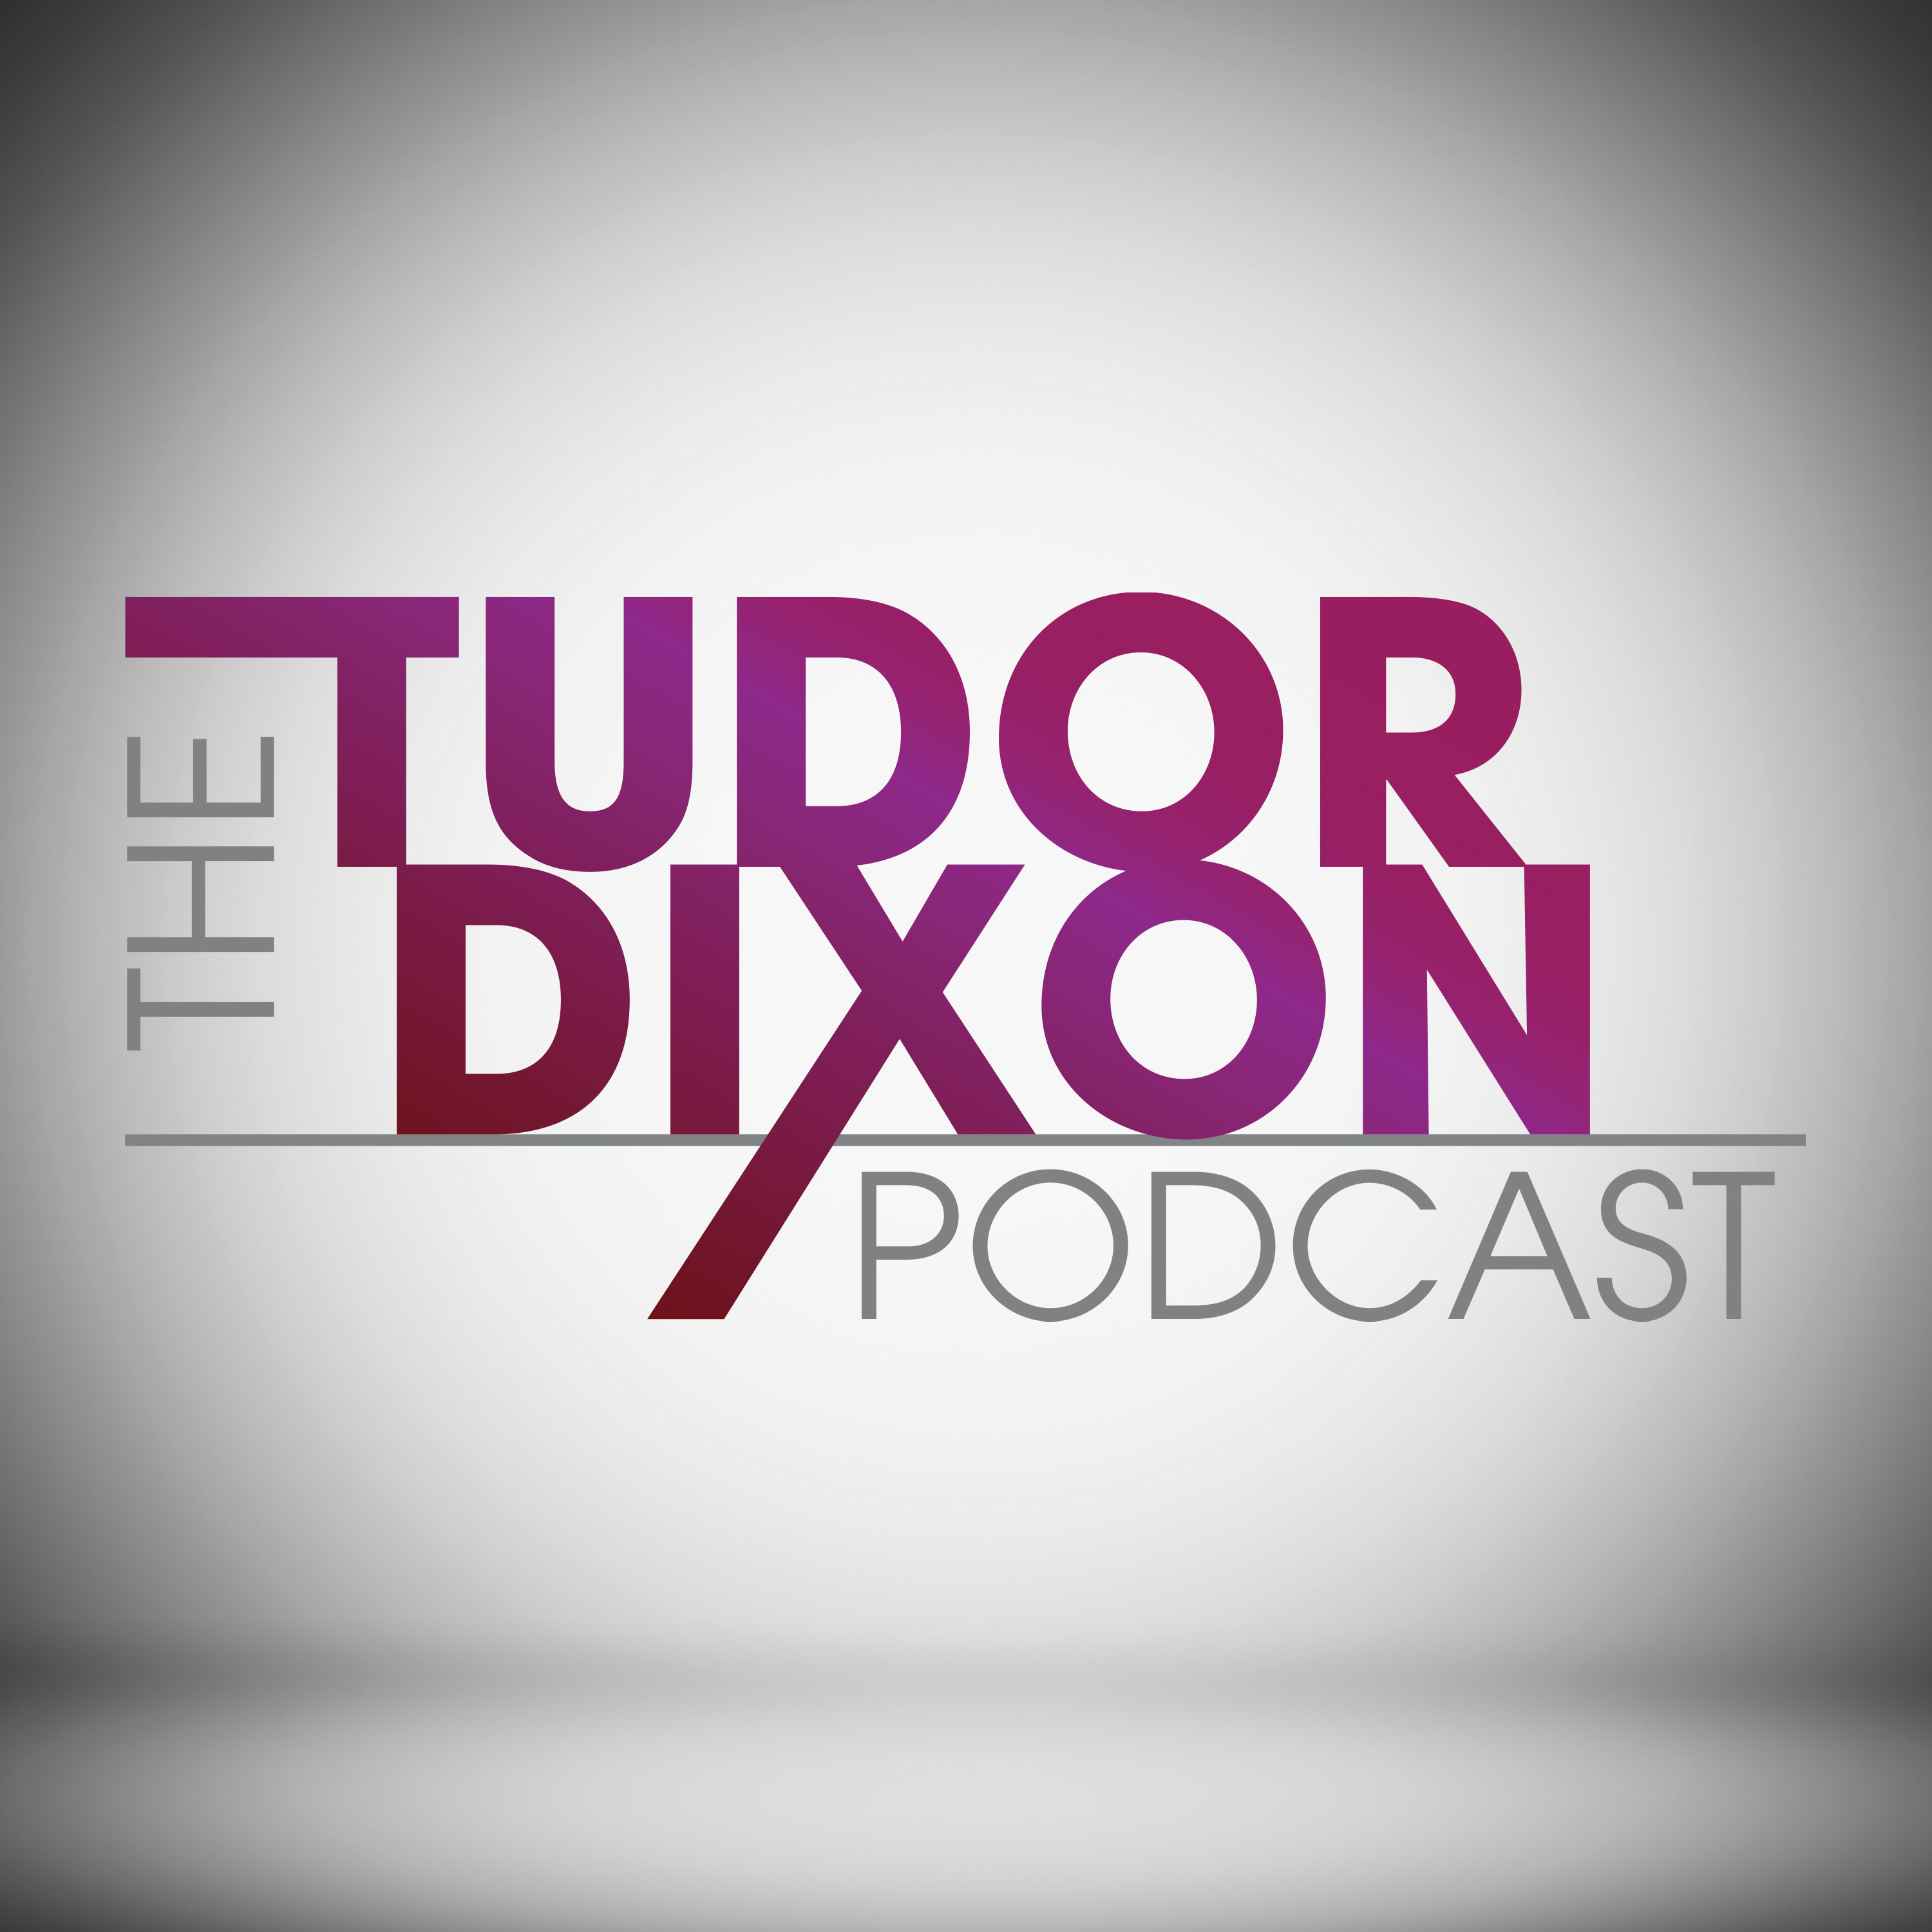 The Tudor Dixon Podcast: Royal Family Drama with Ellie Hall